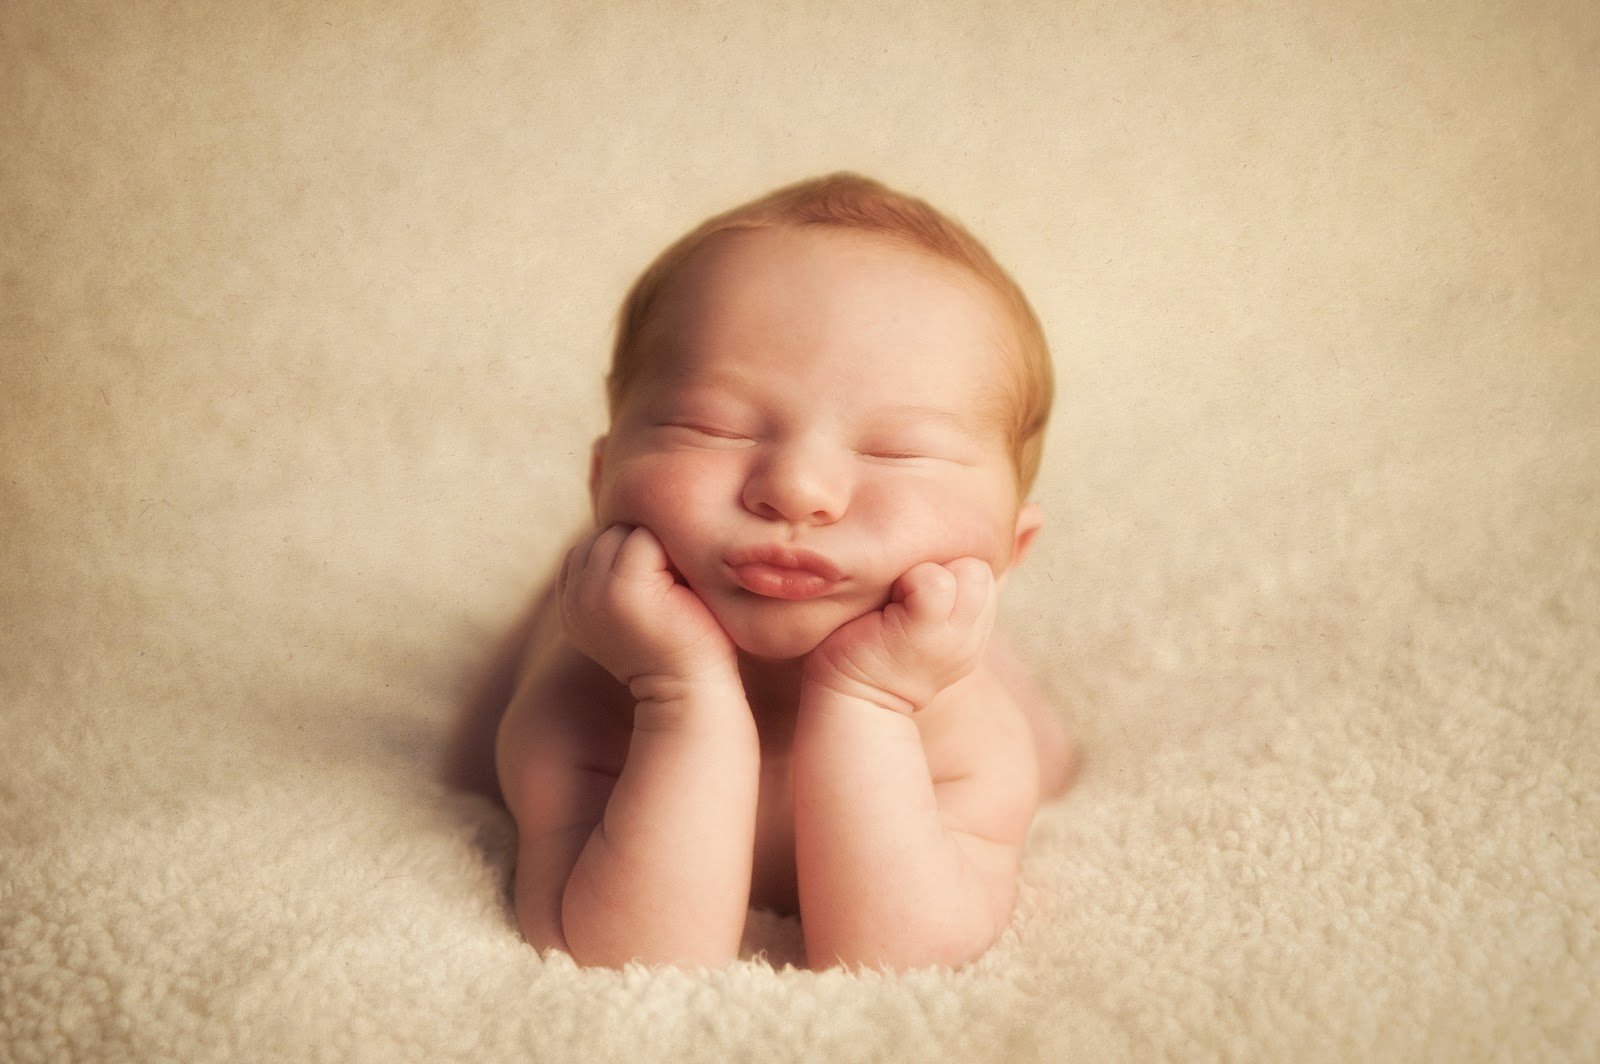 New Baby Photo Ideas - Posing